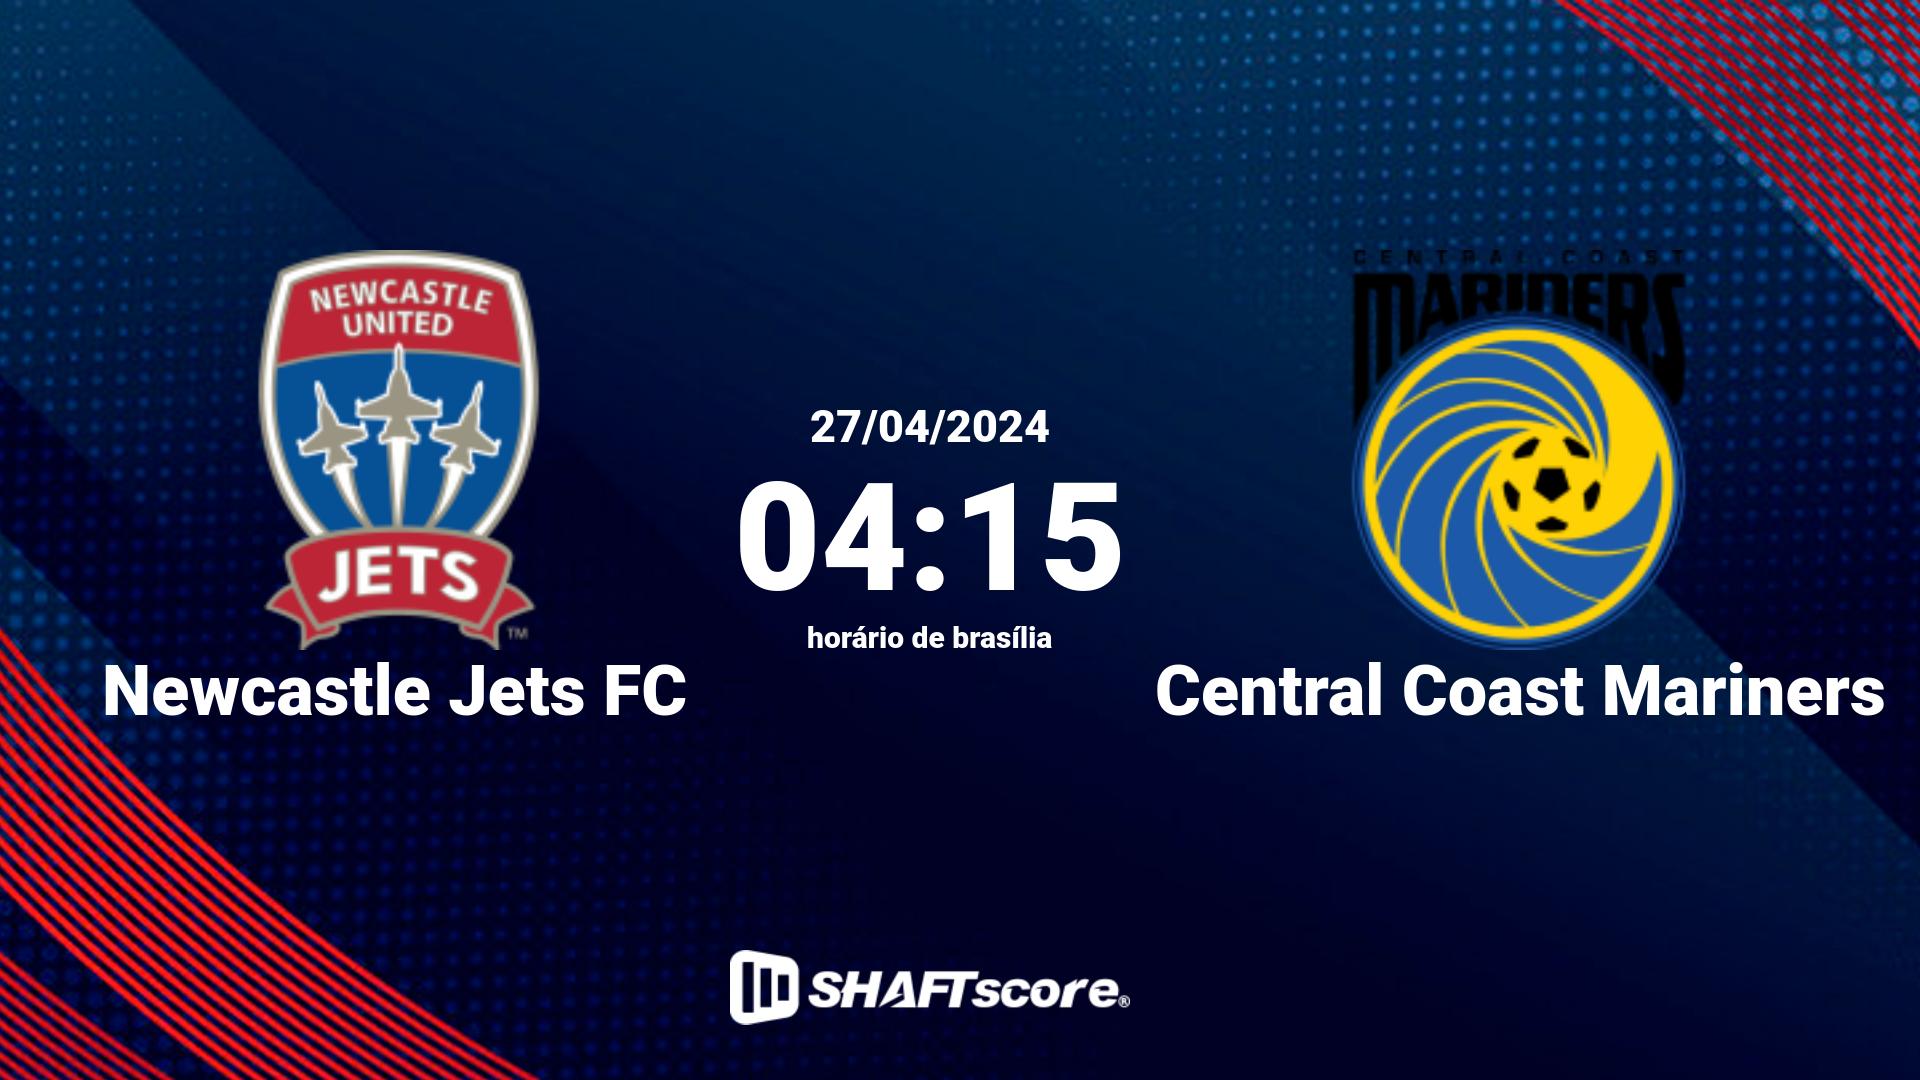 Estatísticas do jogo Newcastle Jets FC vs Central Coast Mariners 27.04 04:15